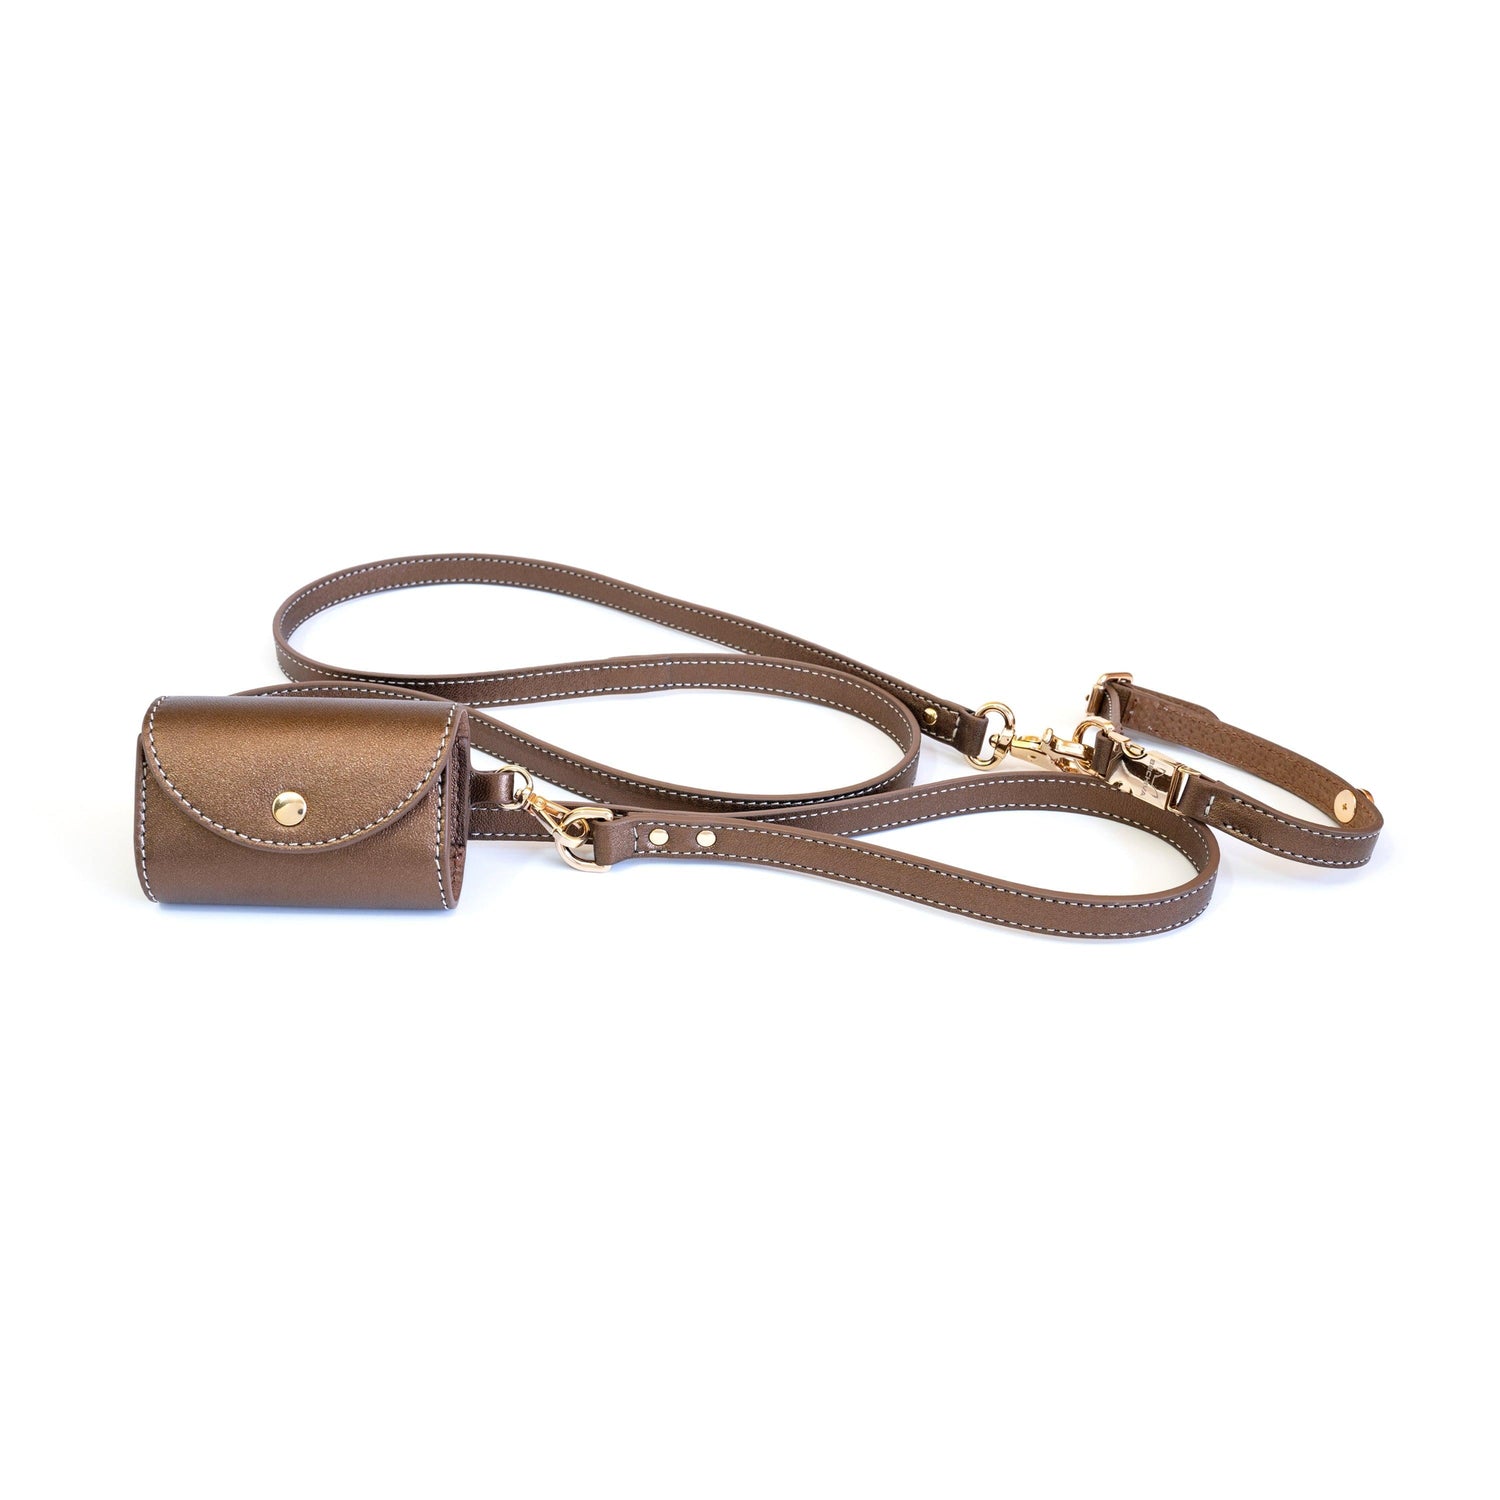 3in1 Set - Dog Harness, Leash, Dispenser Bag - Tino Bronze - Bechiva